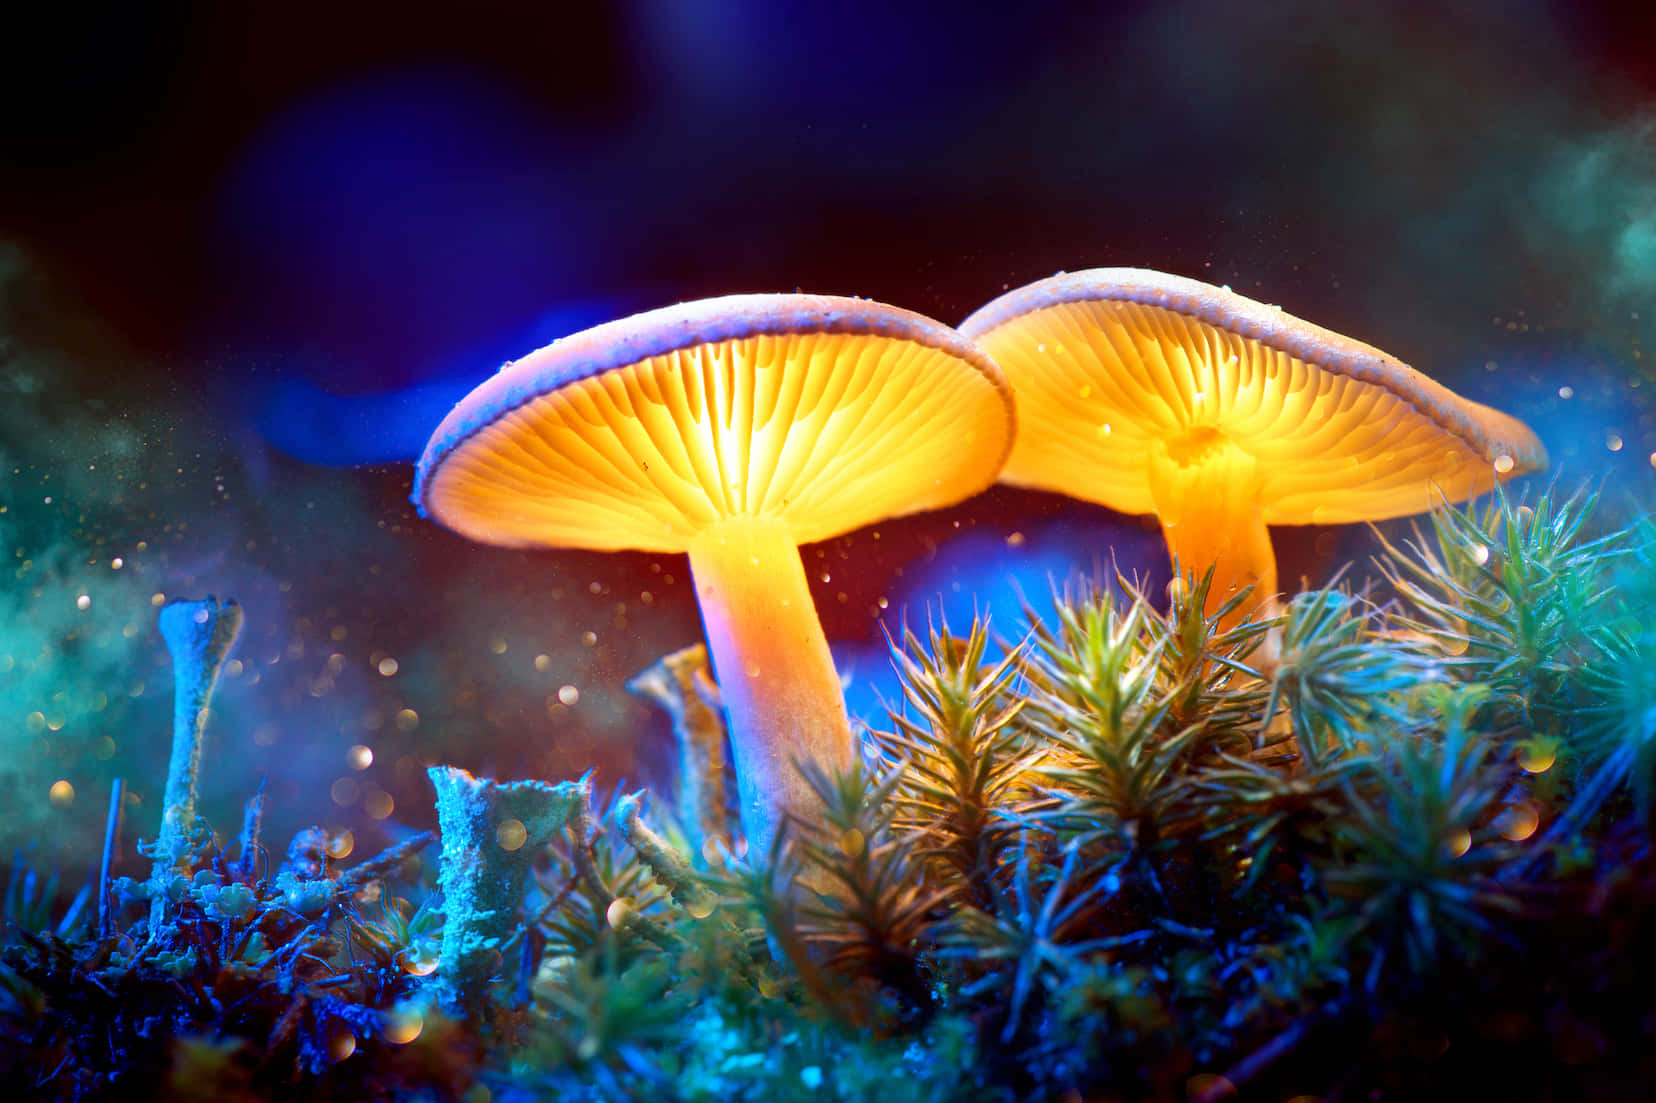 A vibrant image of a psychedelic Magic Mushroom